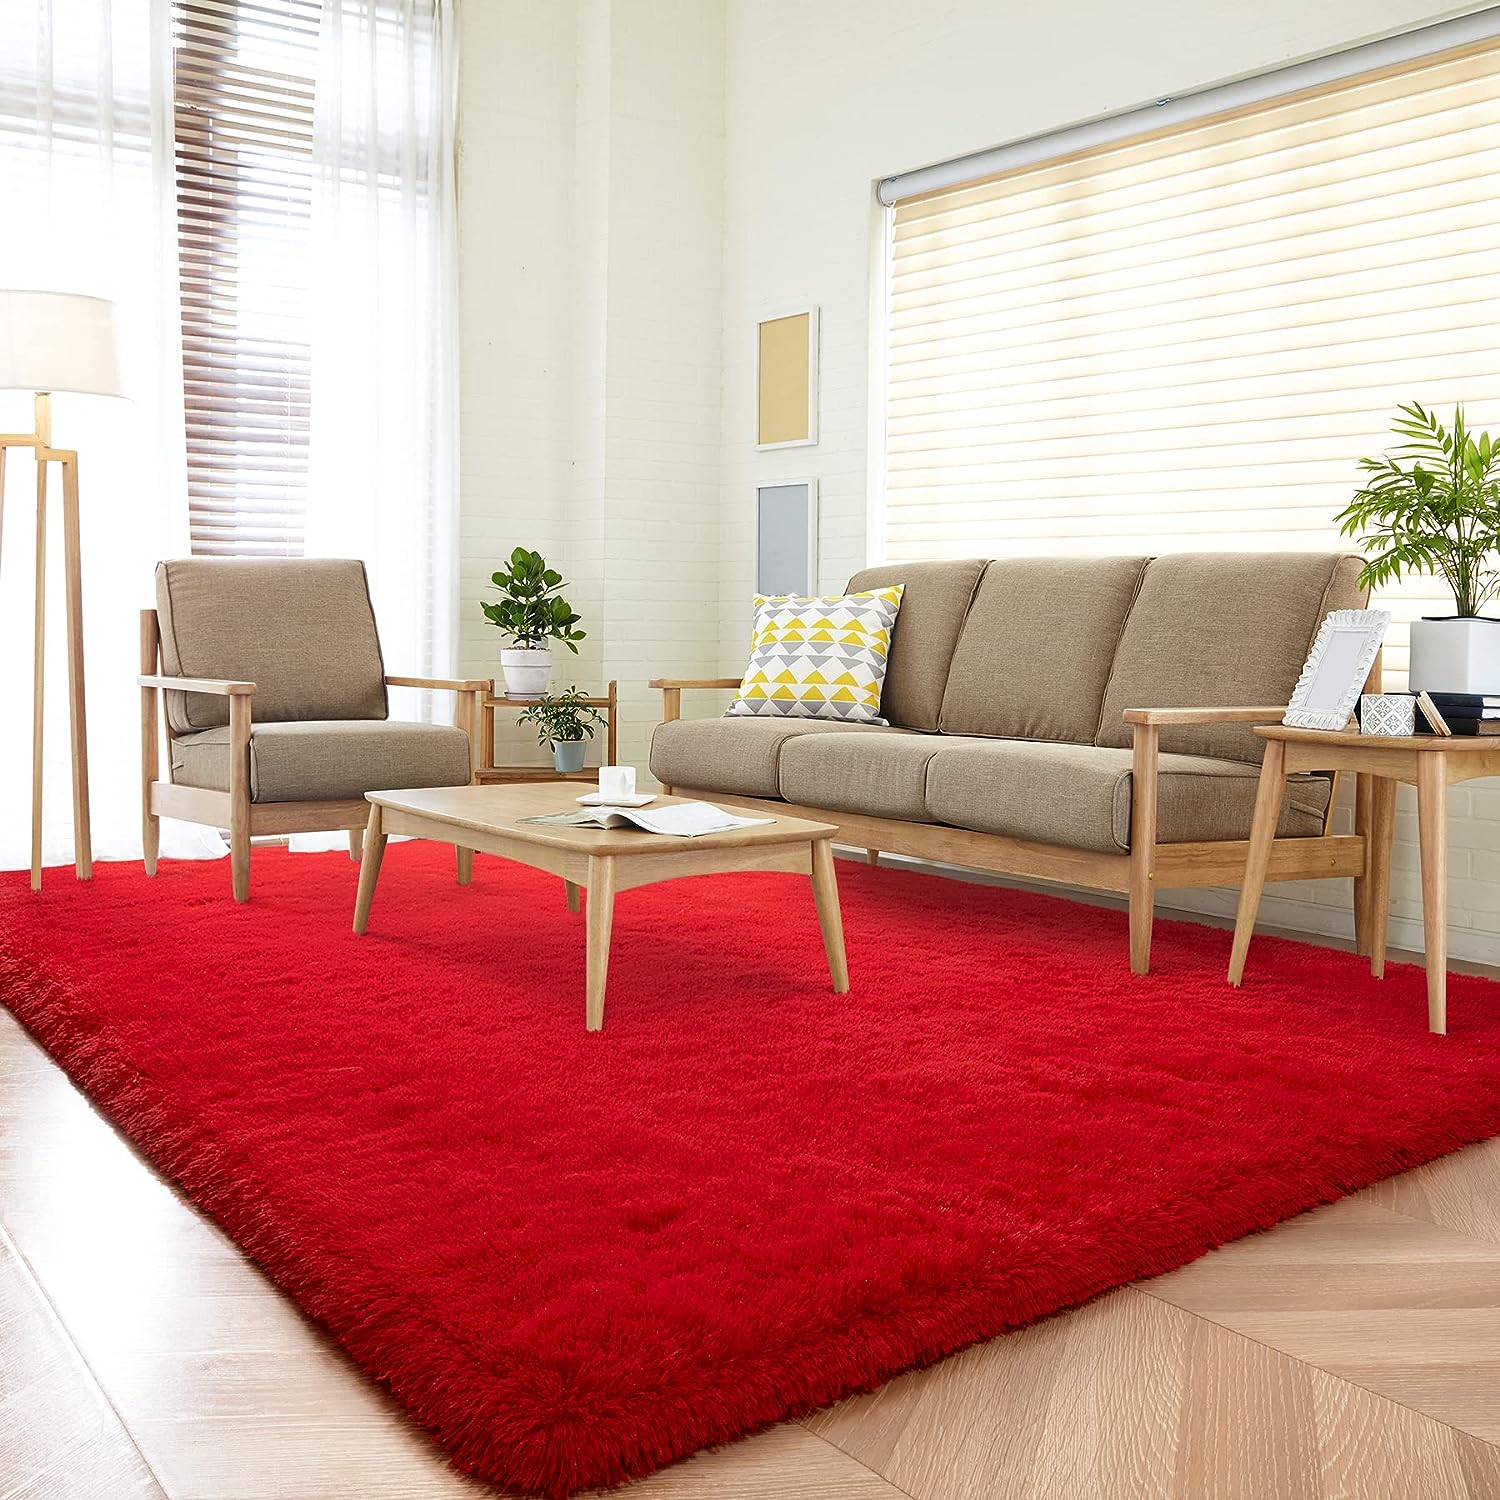 fluffy red rug in living room